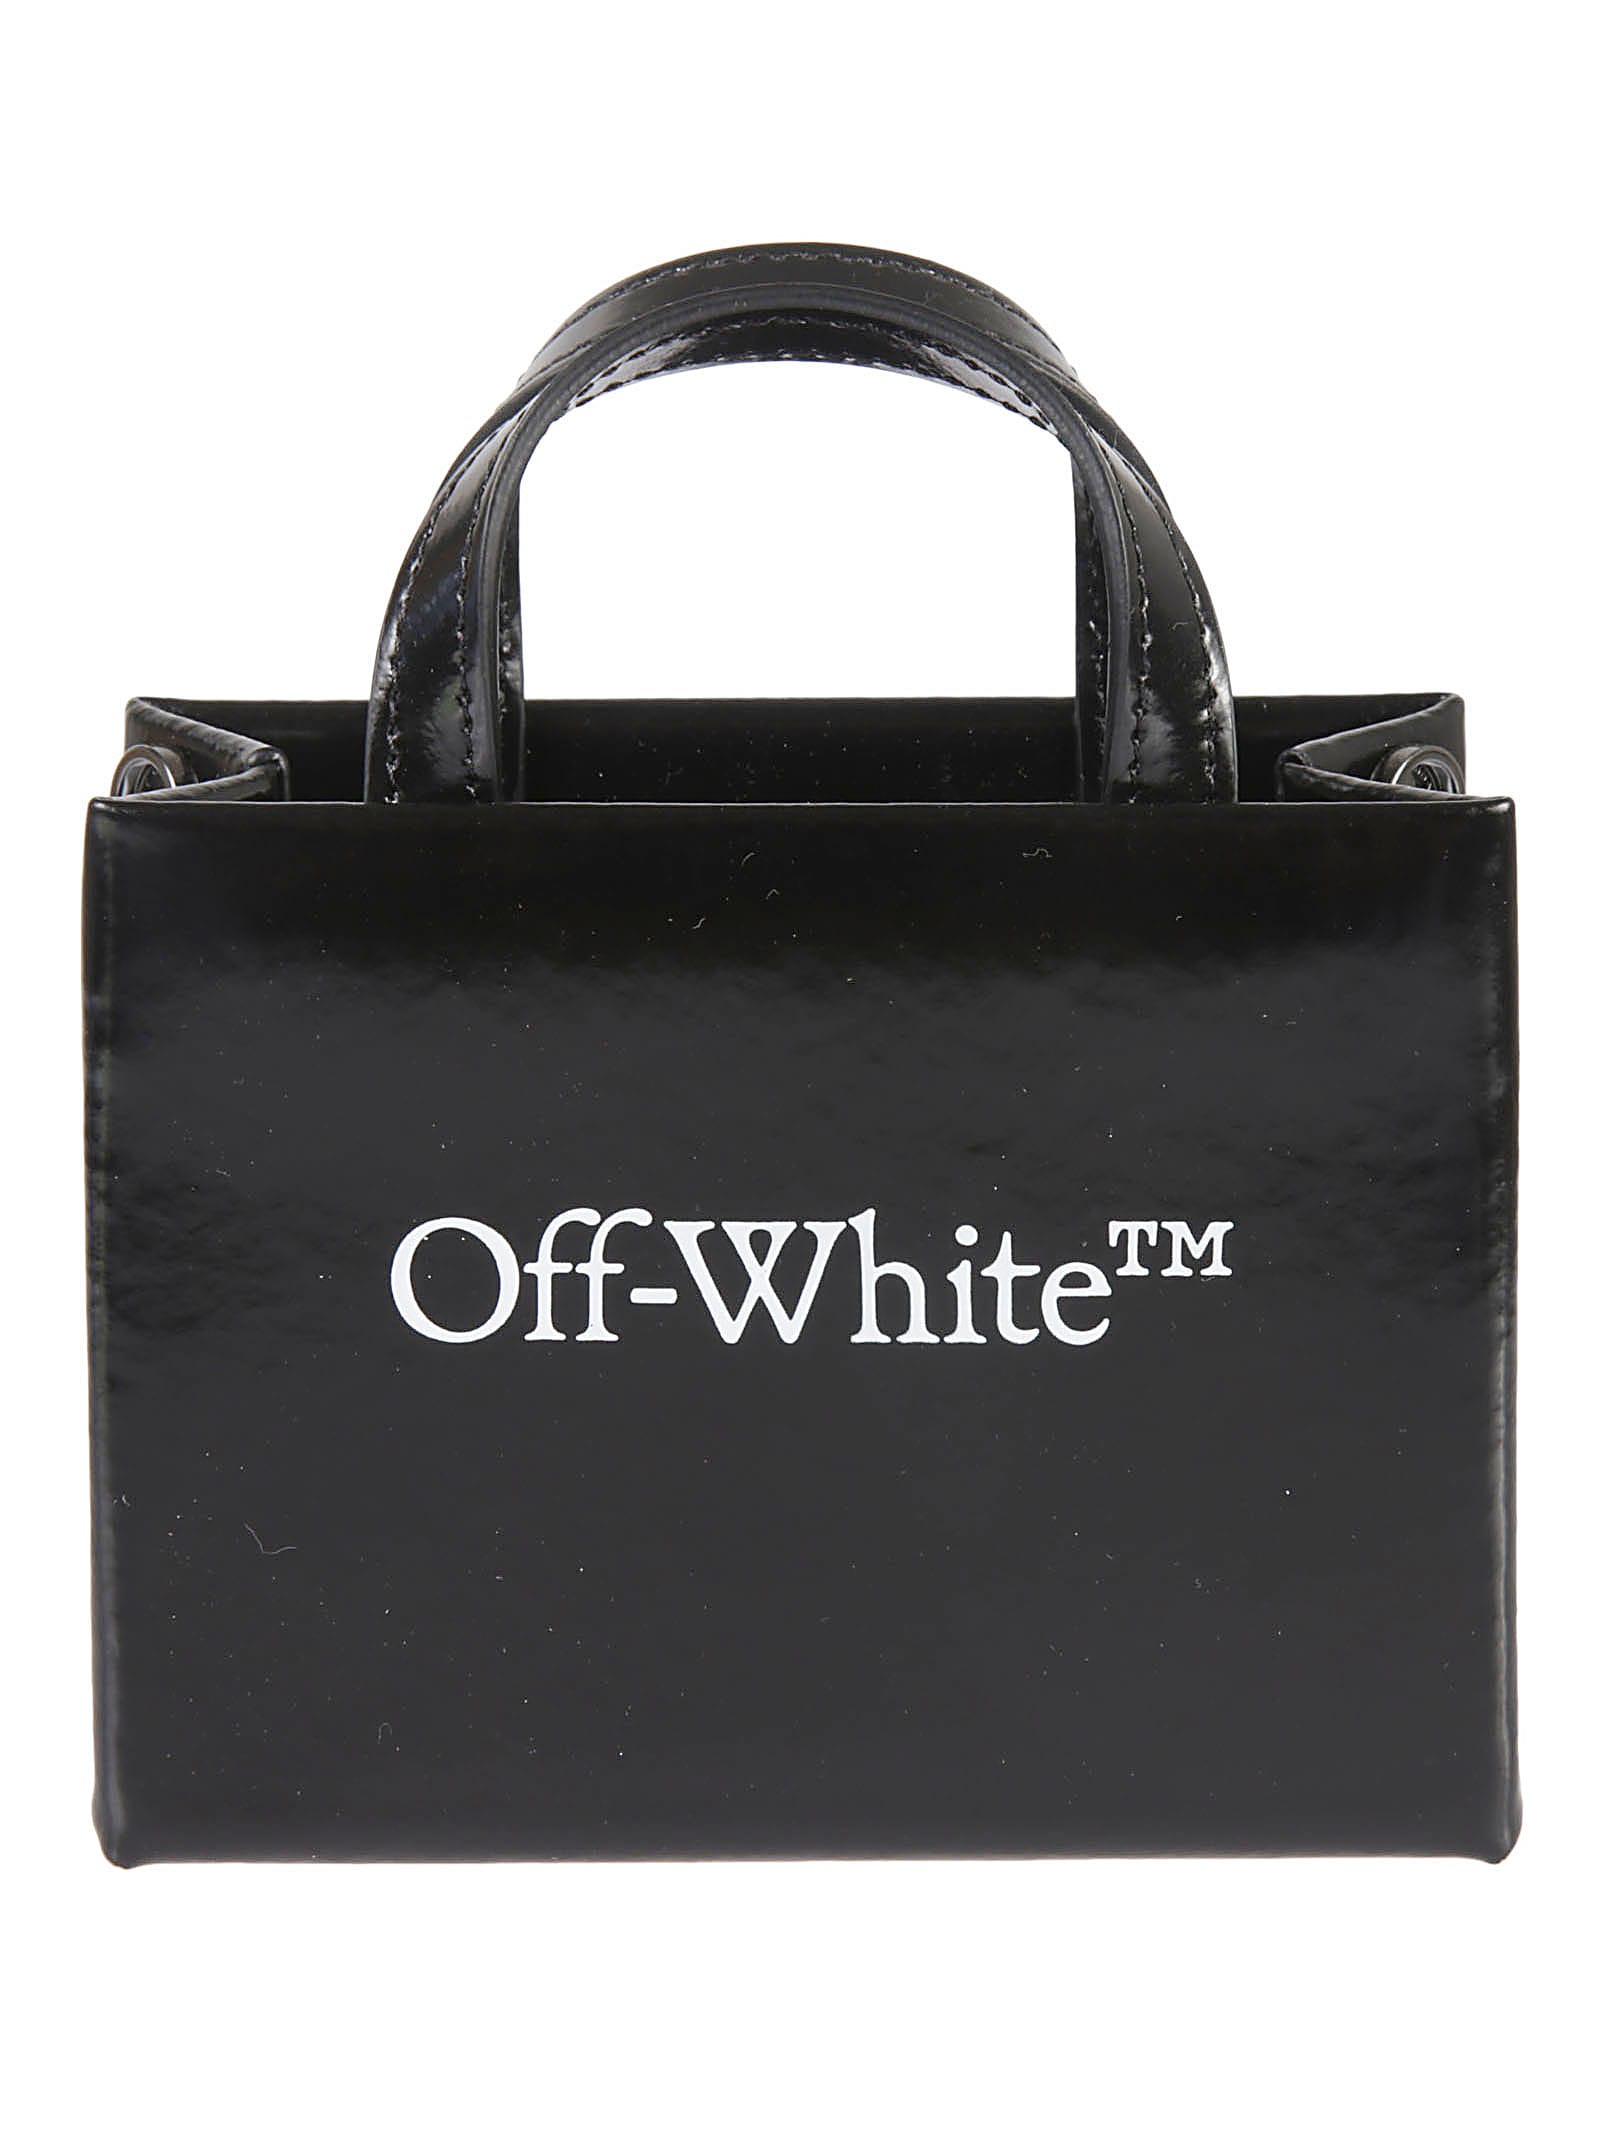 OFF-WHITE LOGO BABY BOX TOTE,OWNA106R21LEA0011001 1001 BLACK WHITE